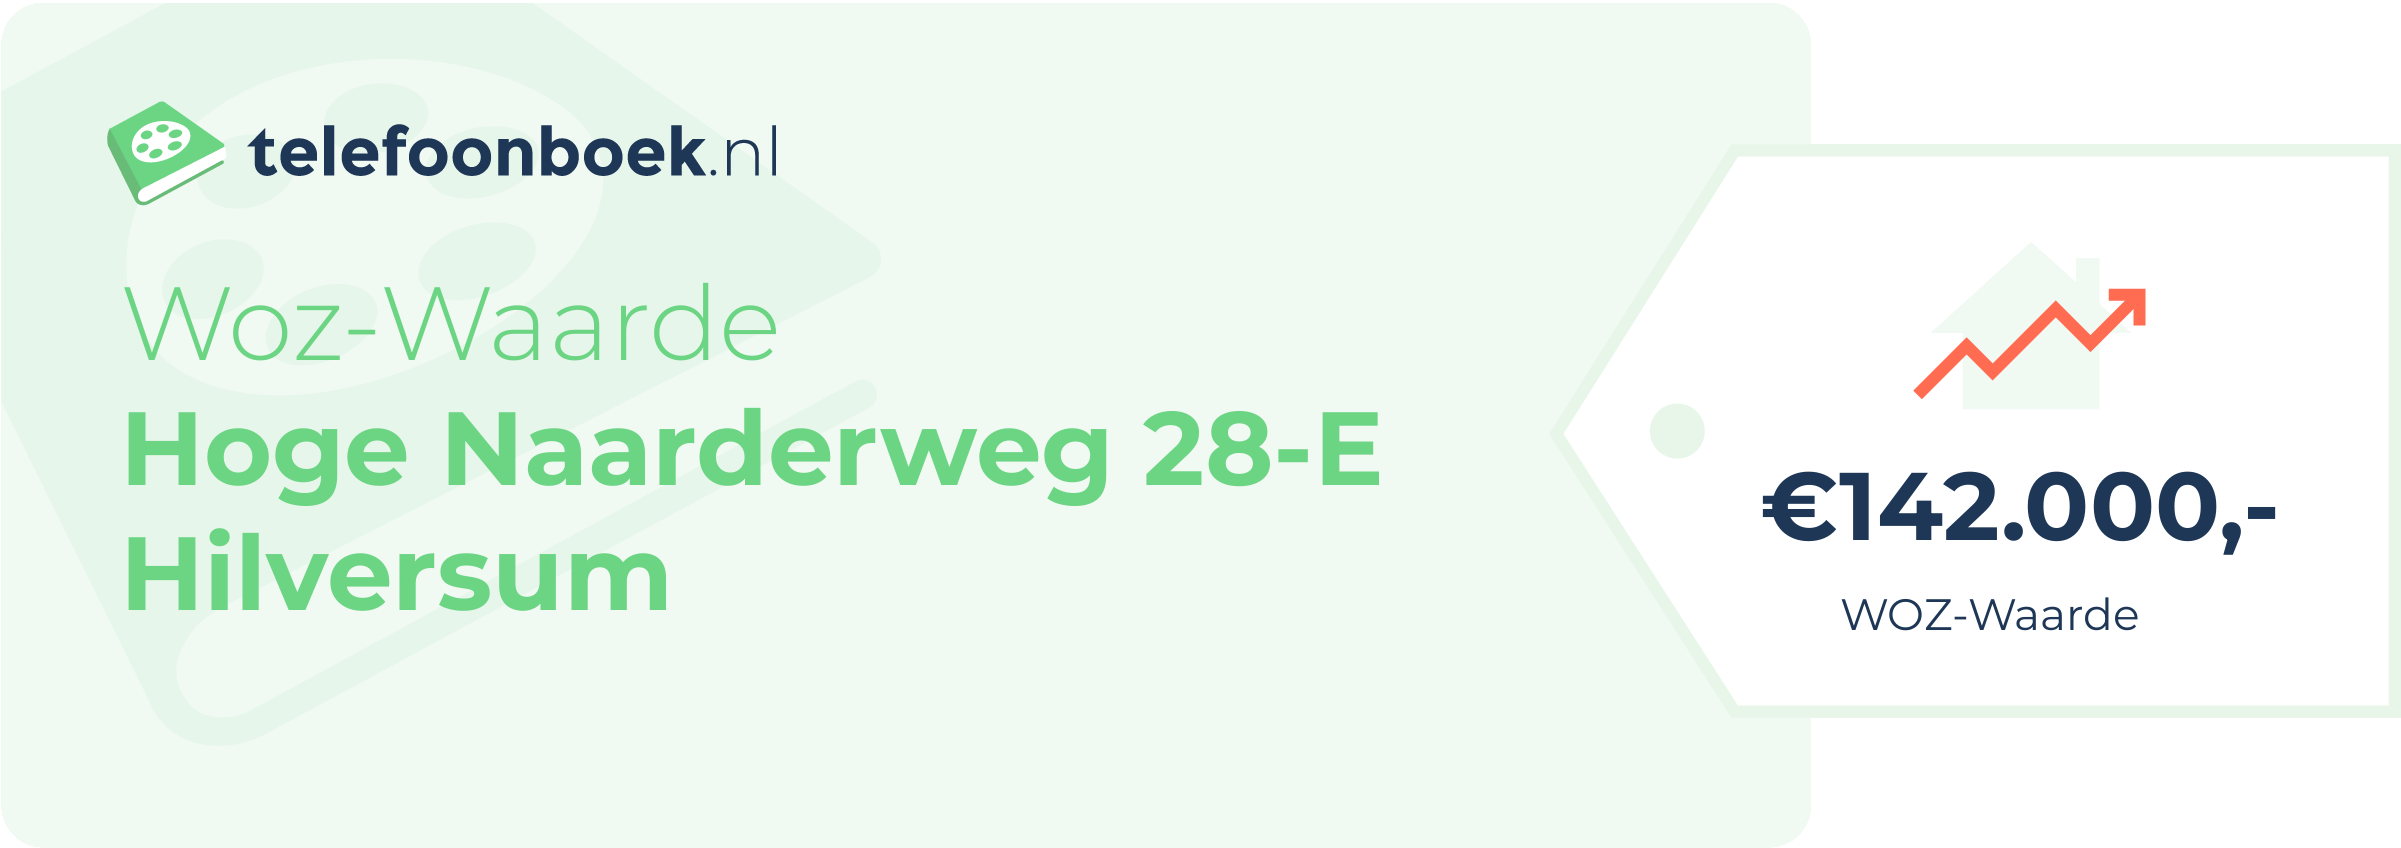 WOZ-waarde Hoge Naarderweg 28-E Hilversum